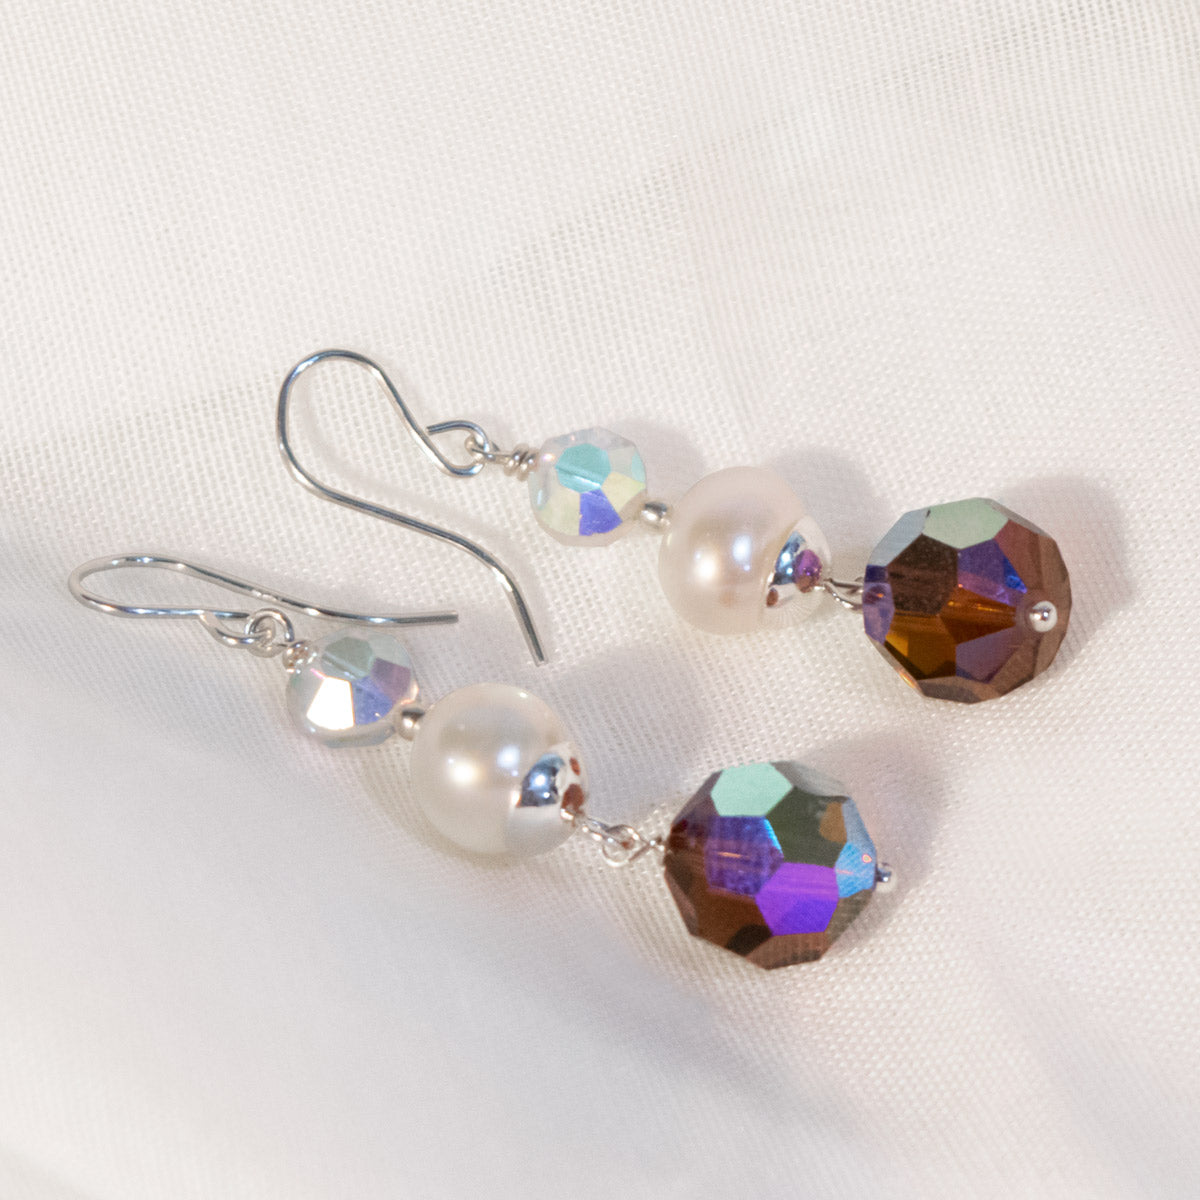 Crystalized Elements & Pearl Earrings